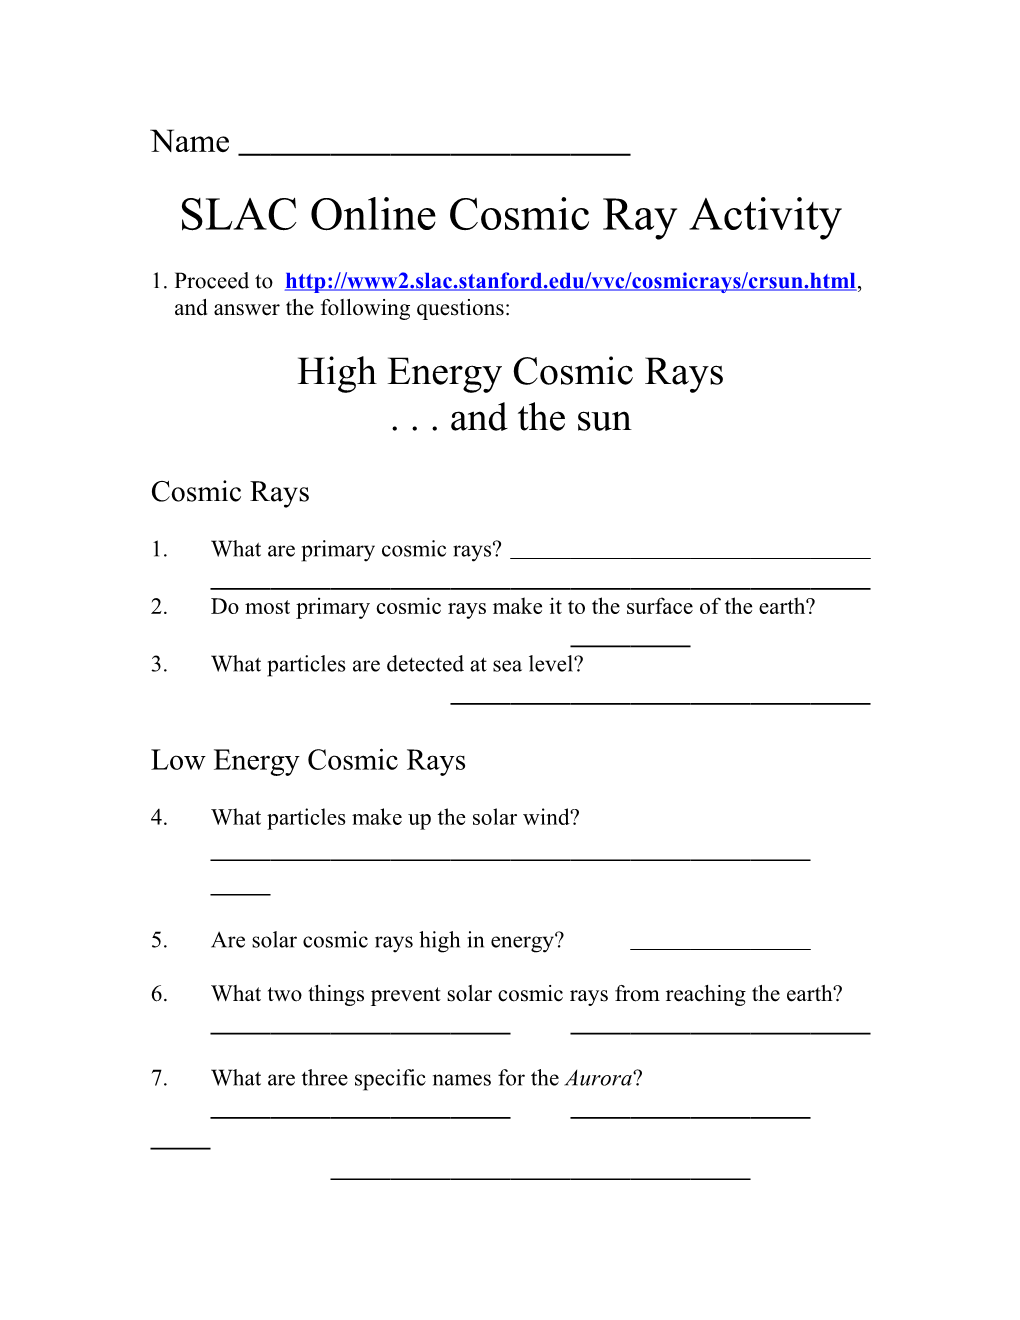 SLAC Online Cosmic Ray Activity